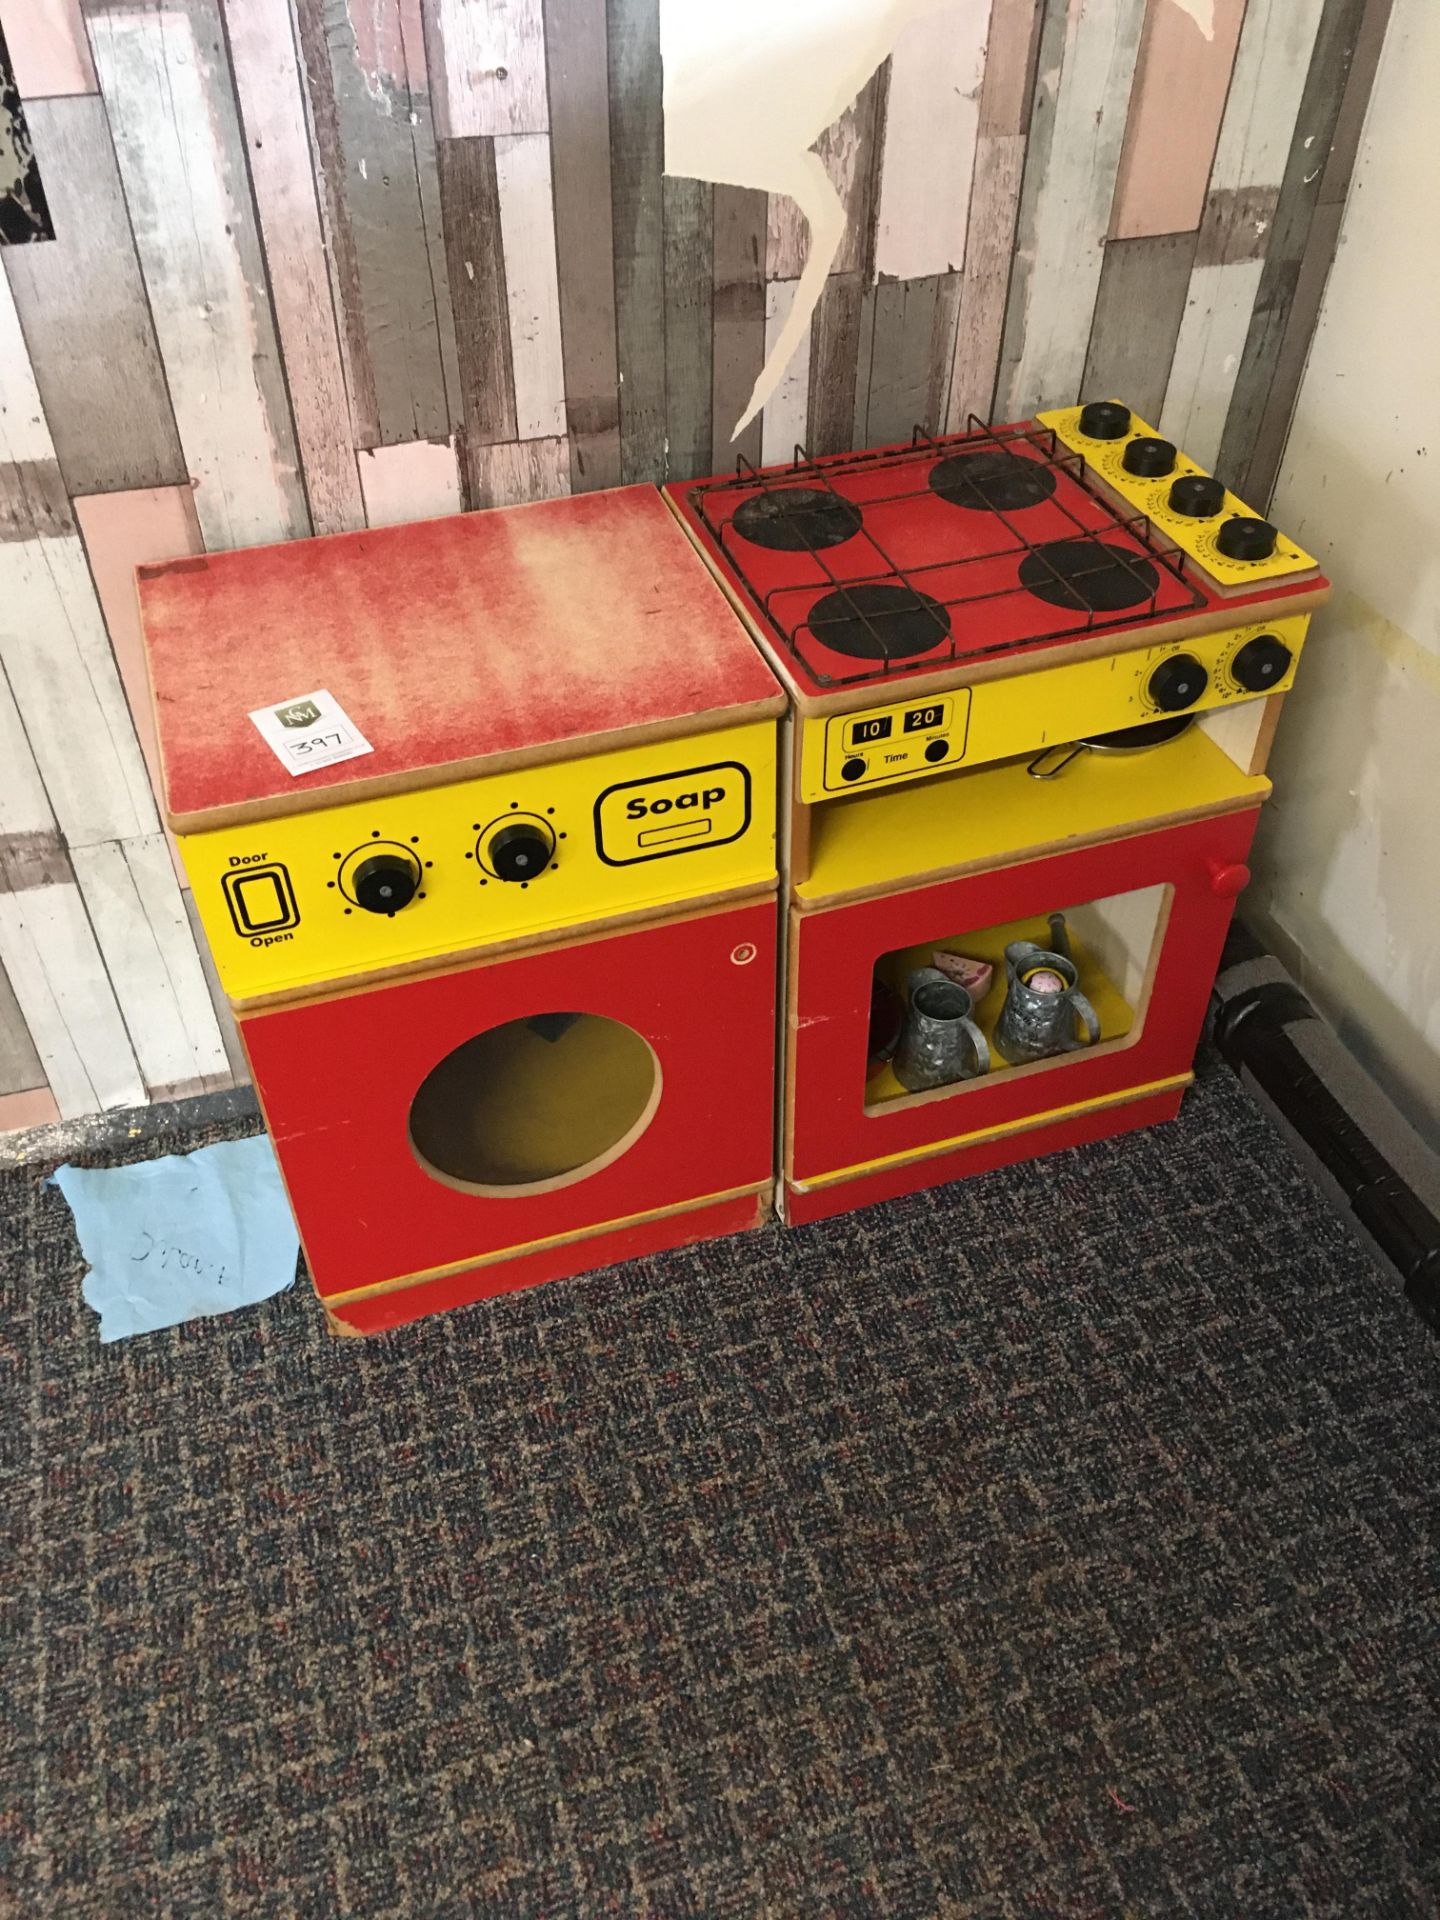 2 x wooden play kitchen appliances